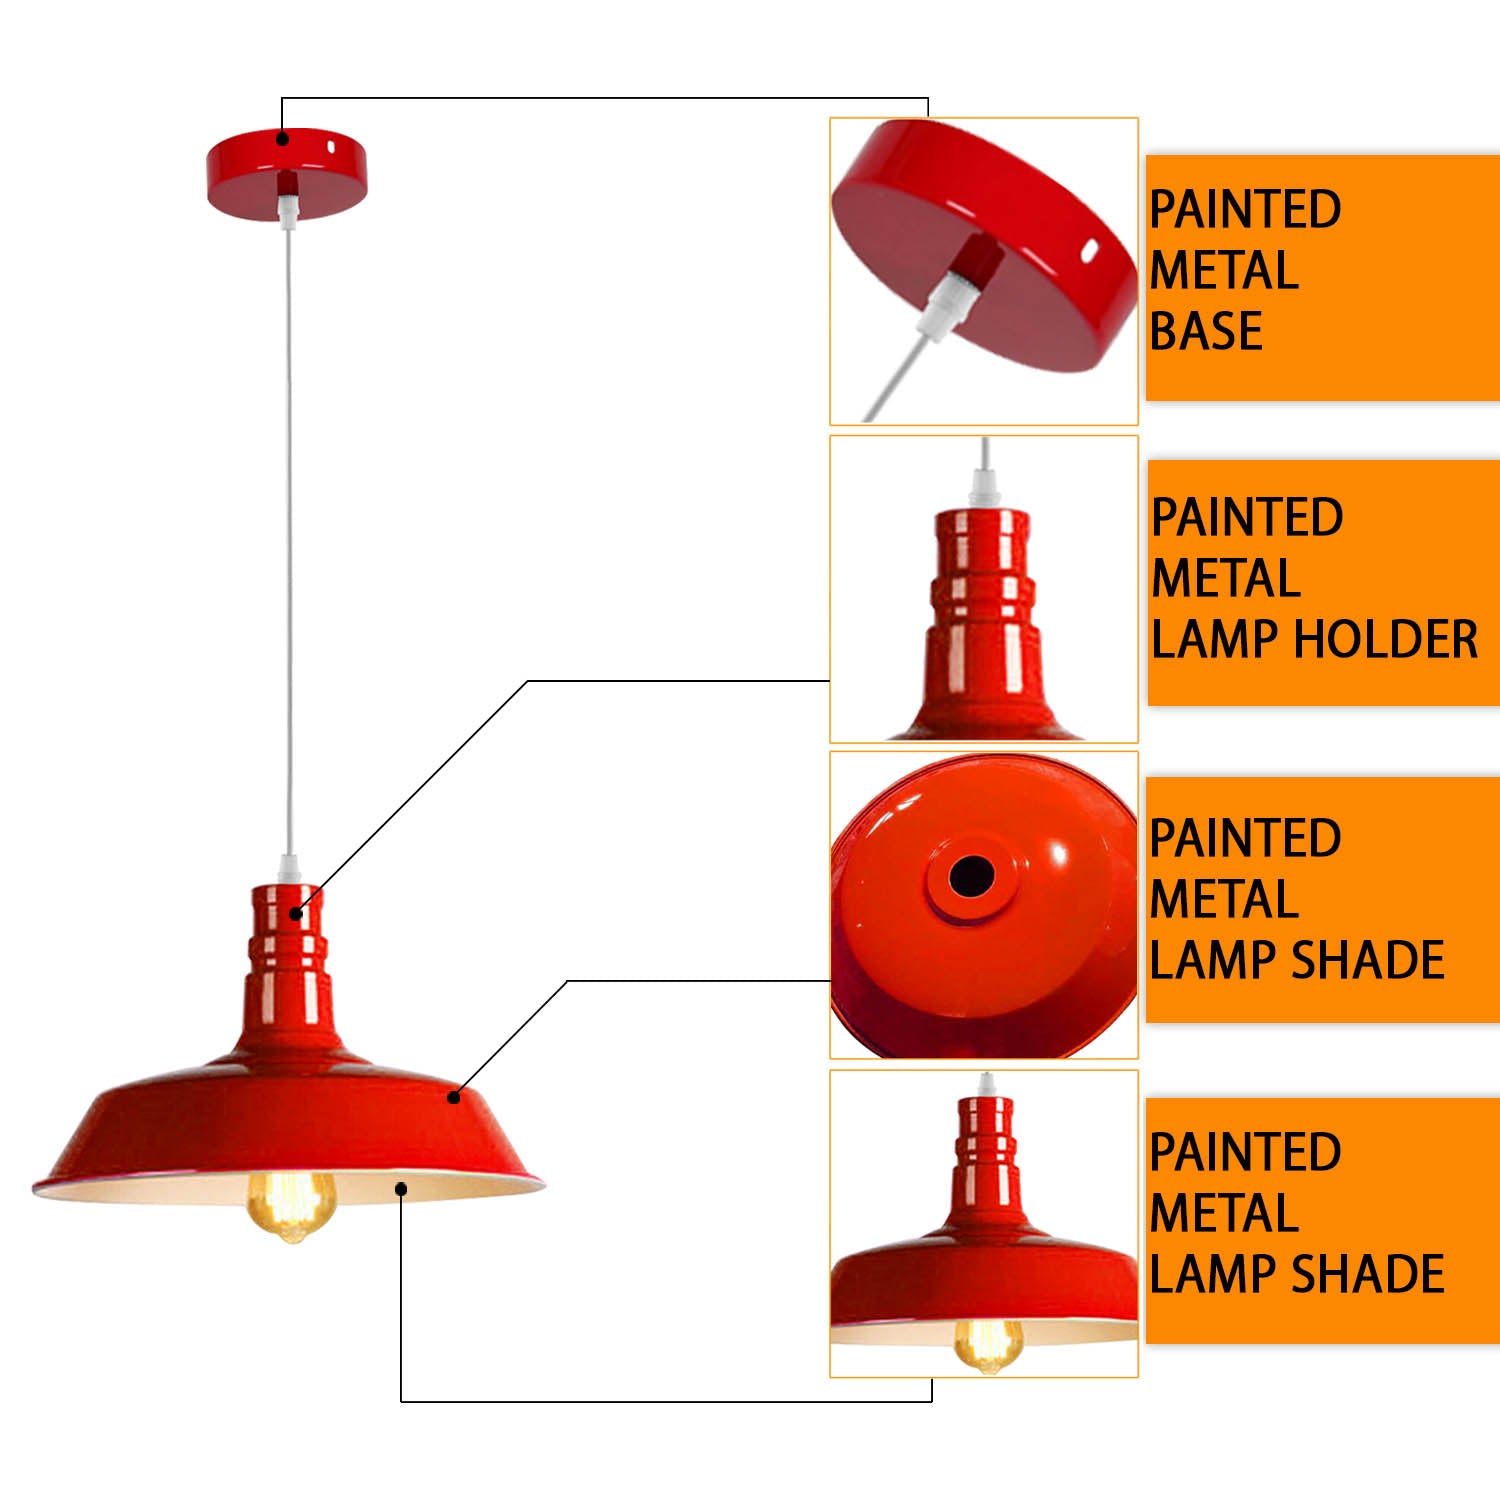 Hanging pendant Ceiling Lamp, Metal Light Shade Lighting UK E27 Edison base Decorate Height Adjustable Pendant Light 